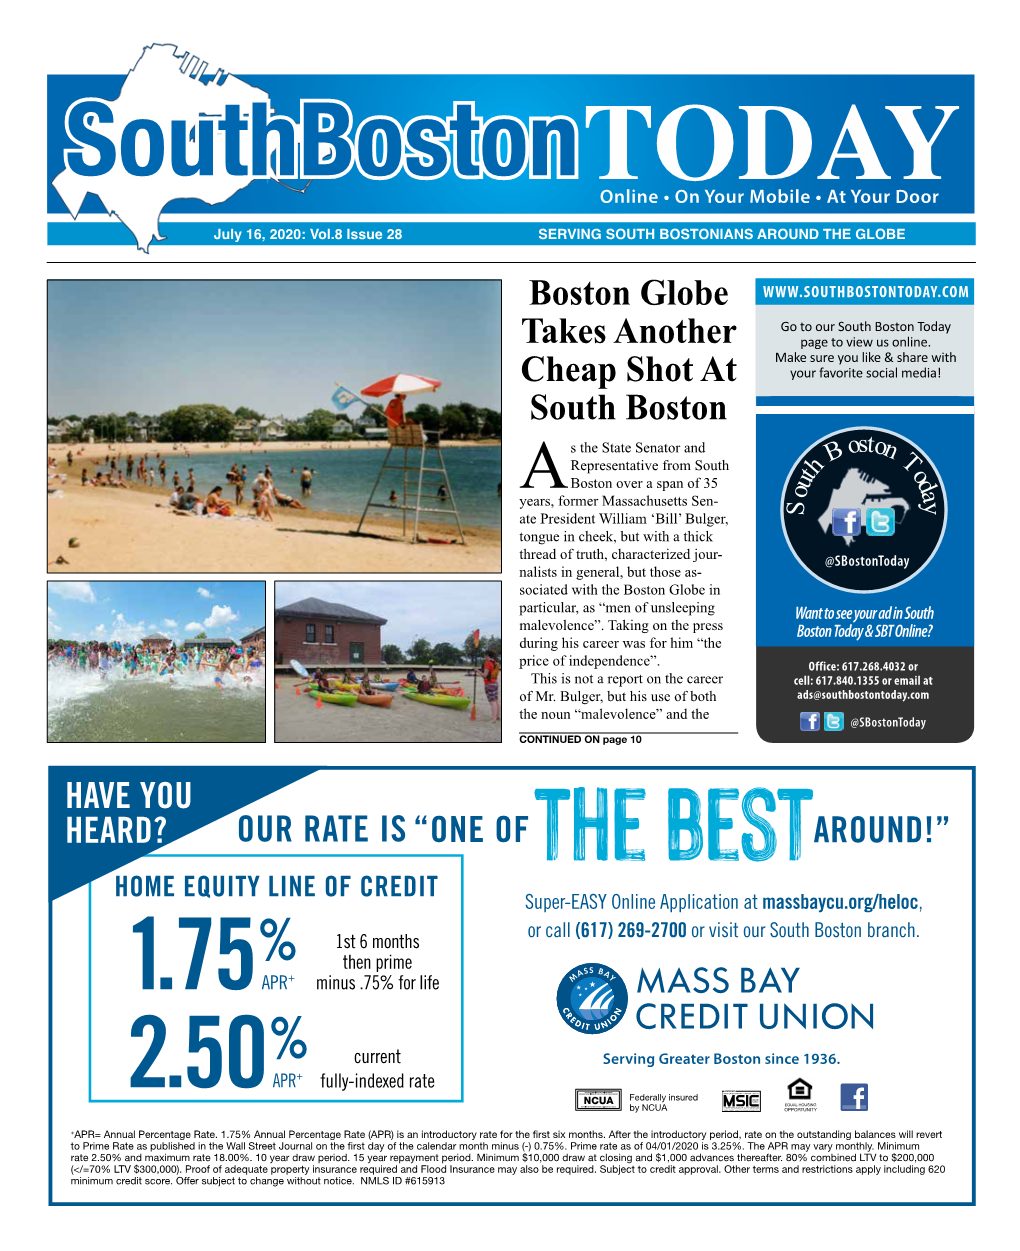 Boston Globe Takes Another Cheap Shot at South